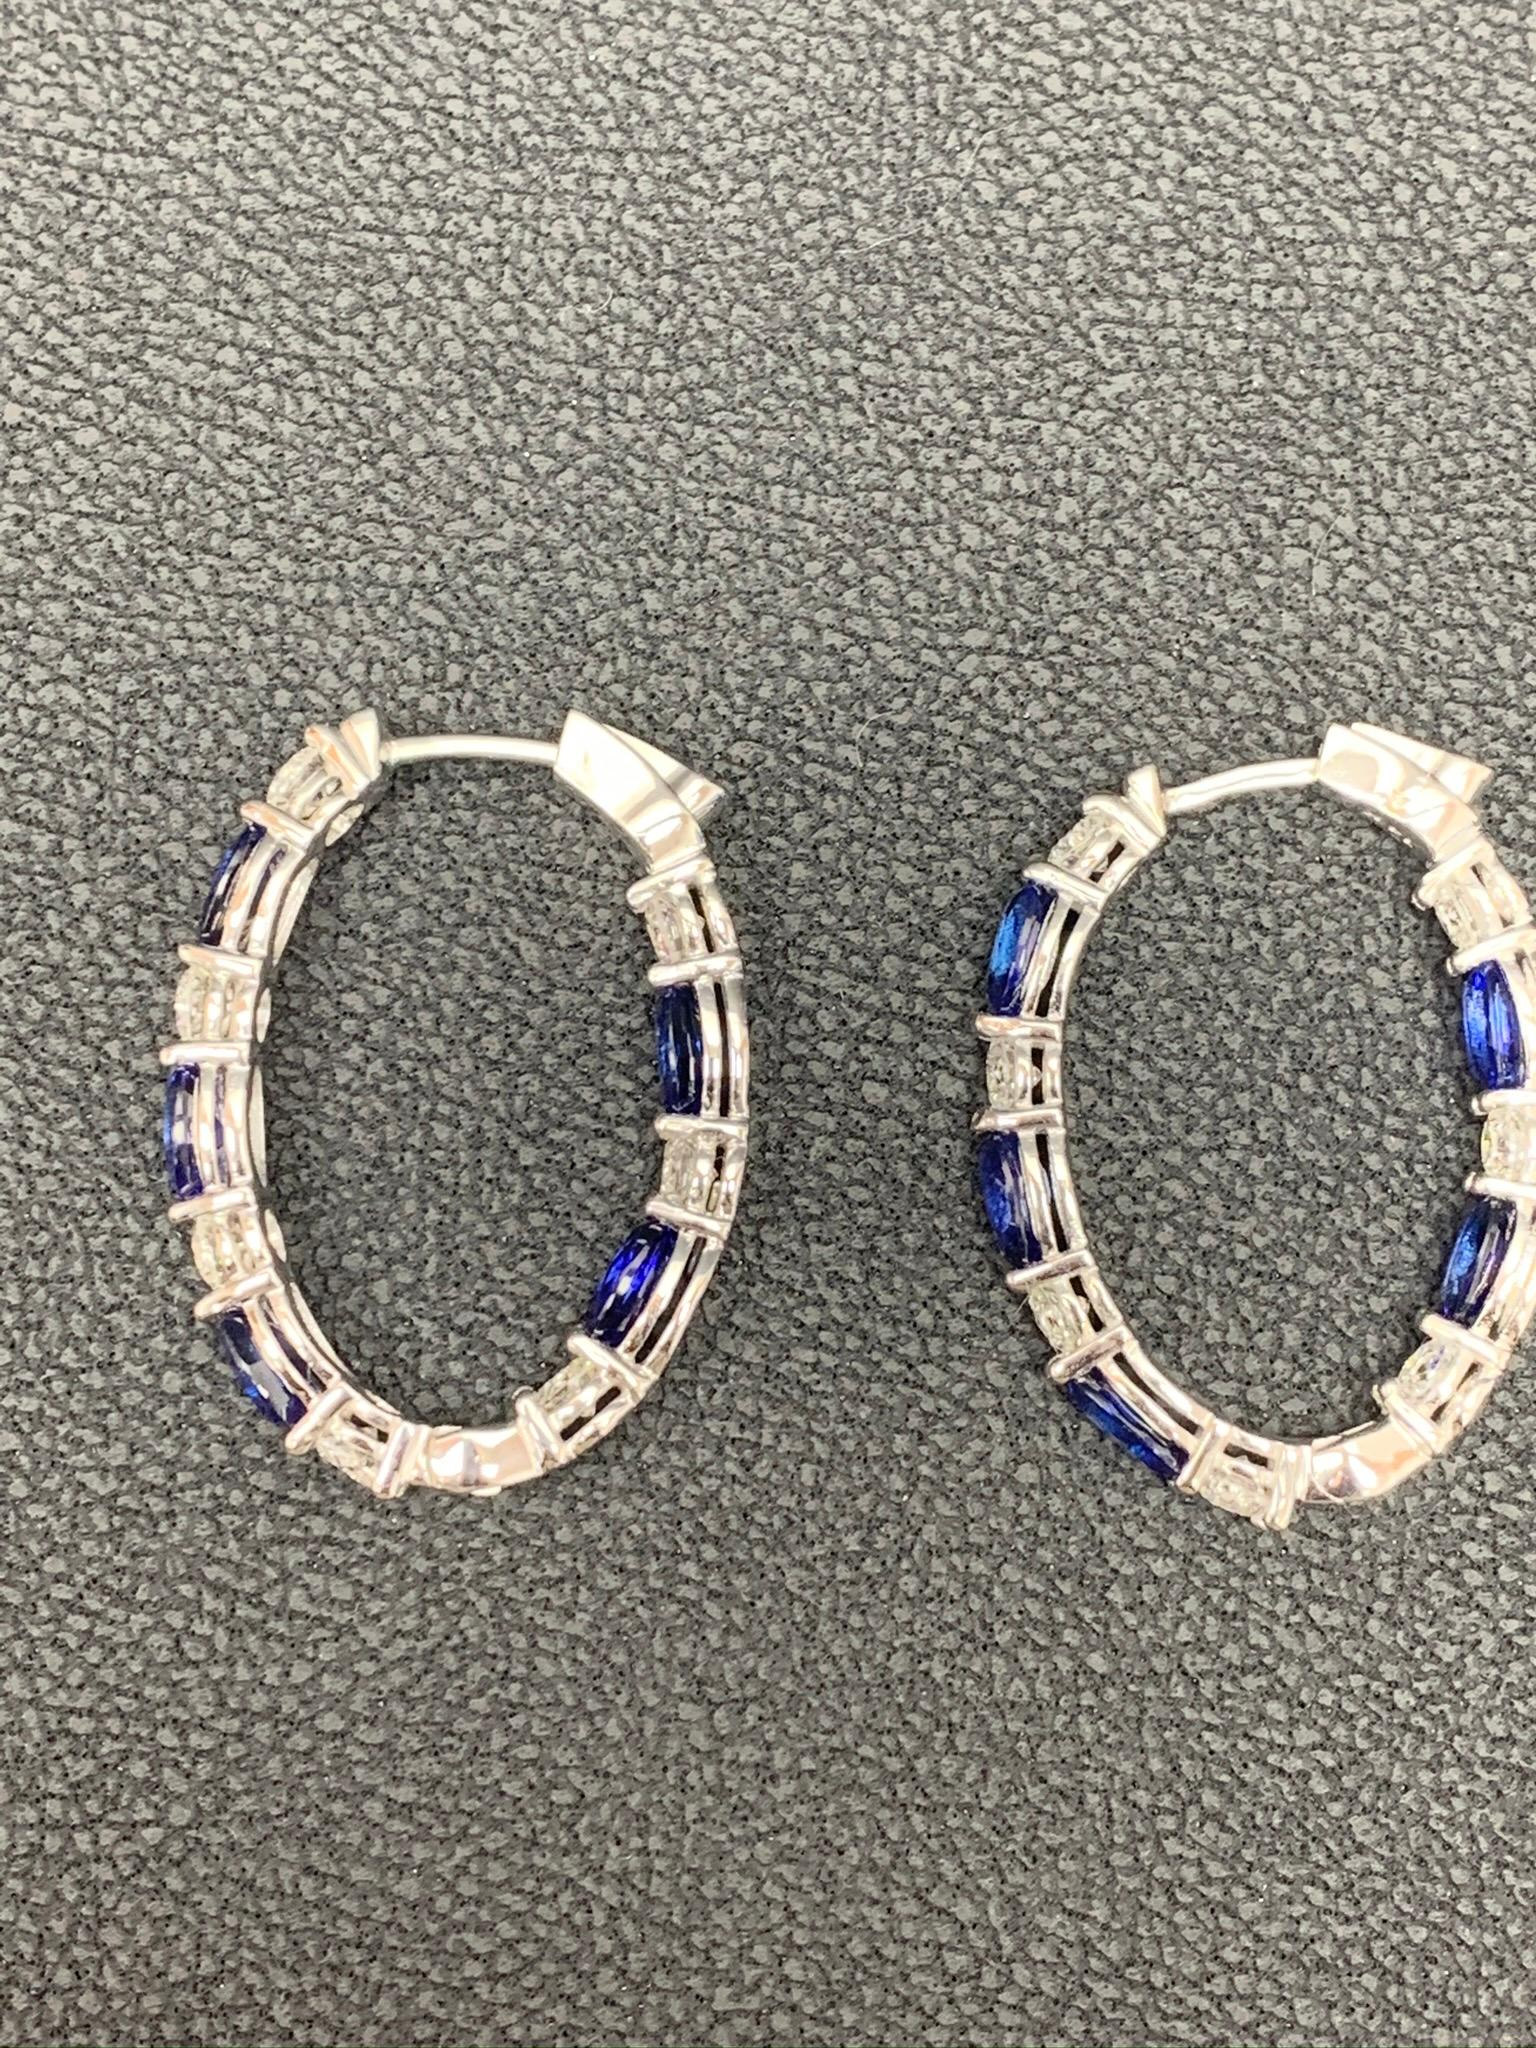 Grandeur 5.54 Carat Oval Cut Blue Sapphire Diamond Hoop Earrings 14K WhiteGold For Sale 2